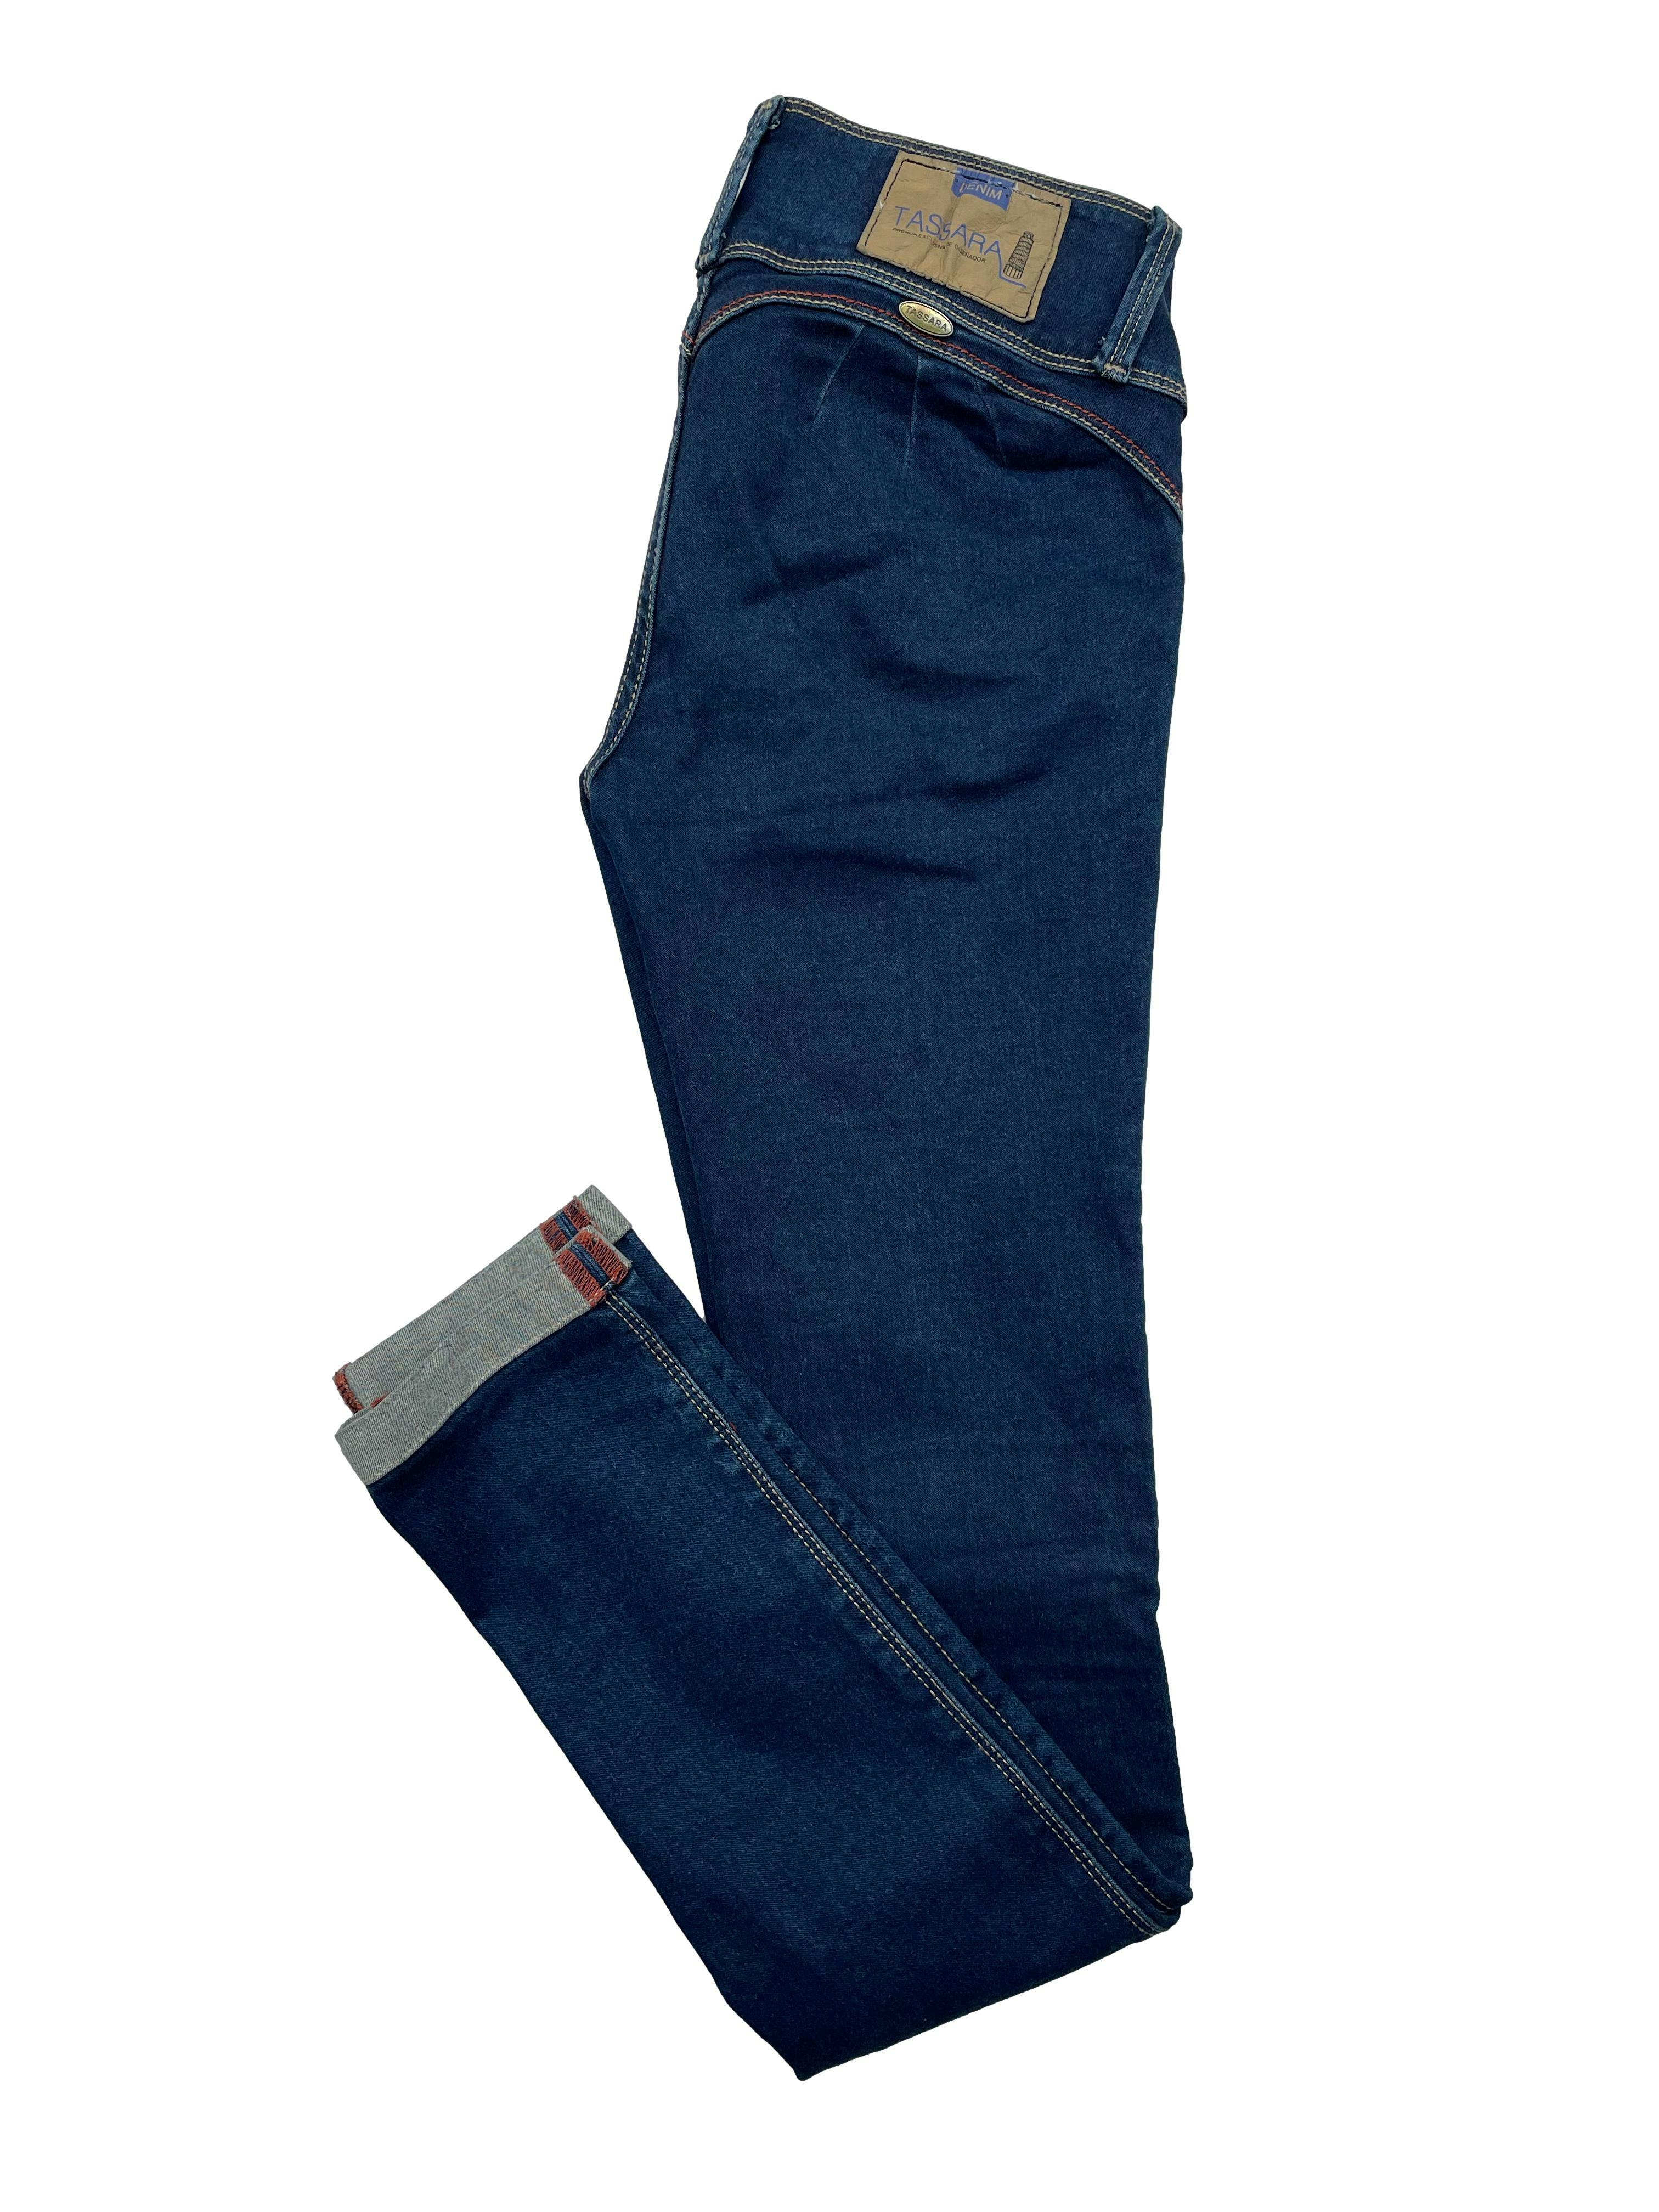 Skinny jean Tassara, costuras a contraste,3 bolsillos, pretina ancha con 2 botones, pinzas posteriore. Pretina 70cm, Tiro 18cm, Largo 98cm